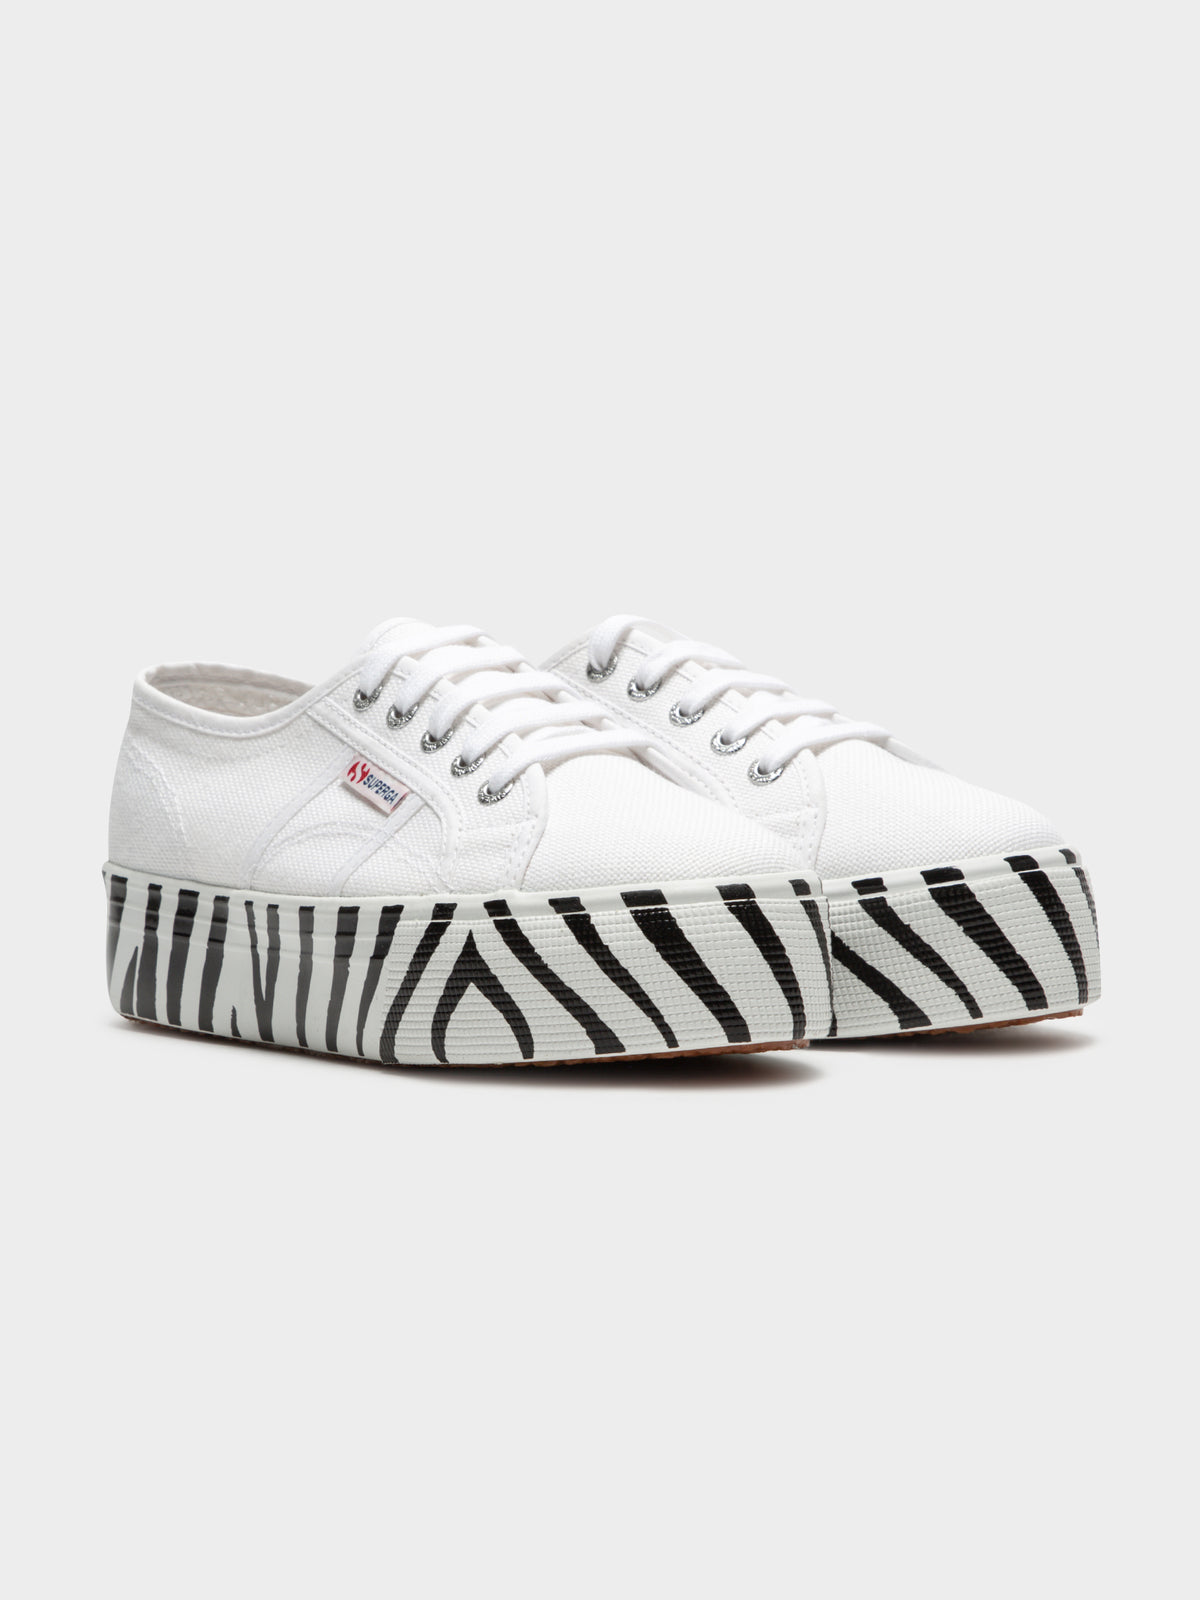 Unisex 2790 Cotw Printed Platform Sneakers in White &amp; Black